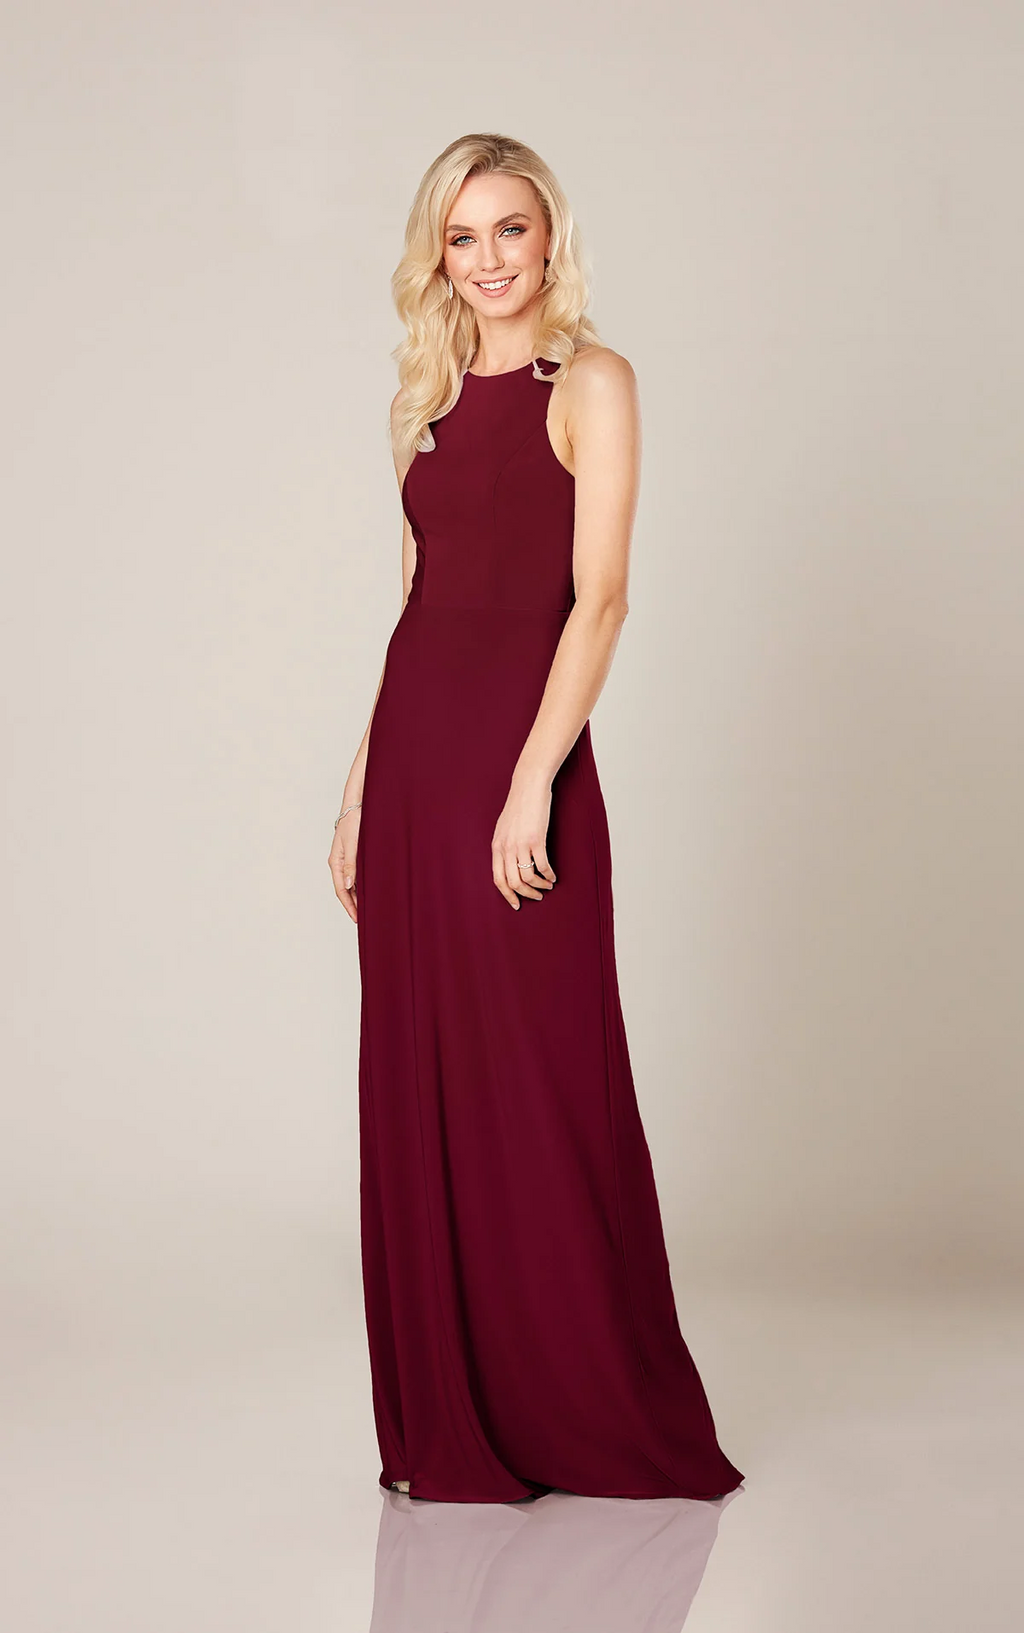 Sorella Vita Dress Style 9356 (Garnet-Size 10) Prom, Ball., Black-tie, Bridesmaid, Pageant